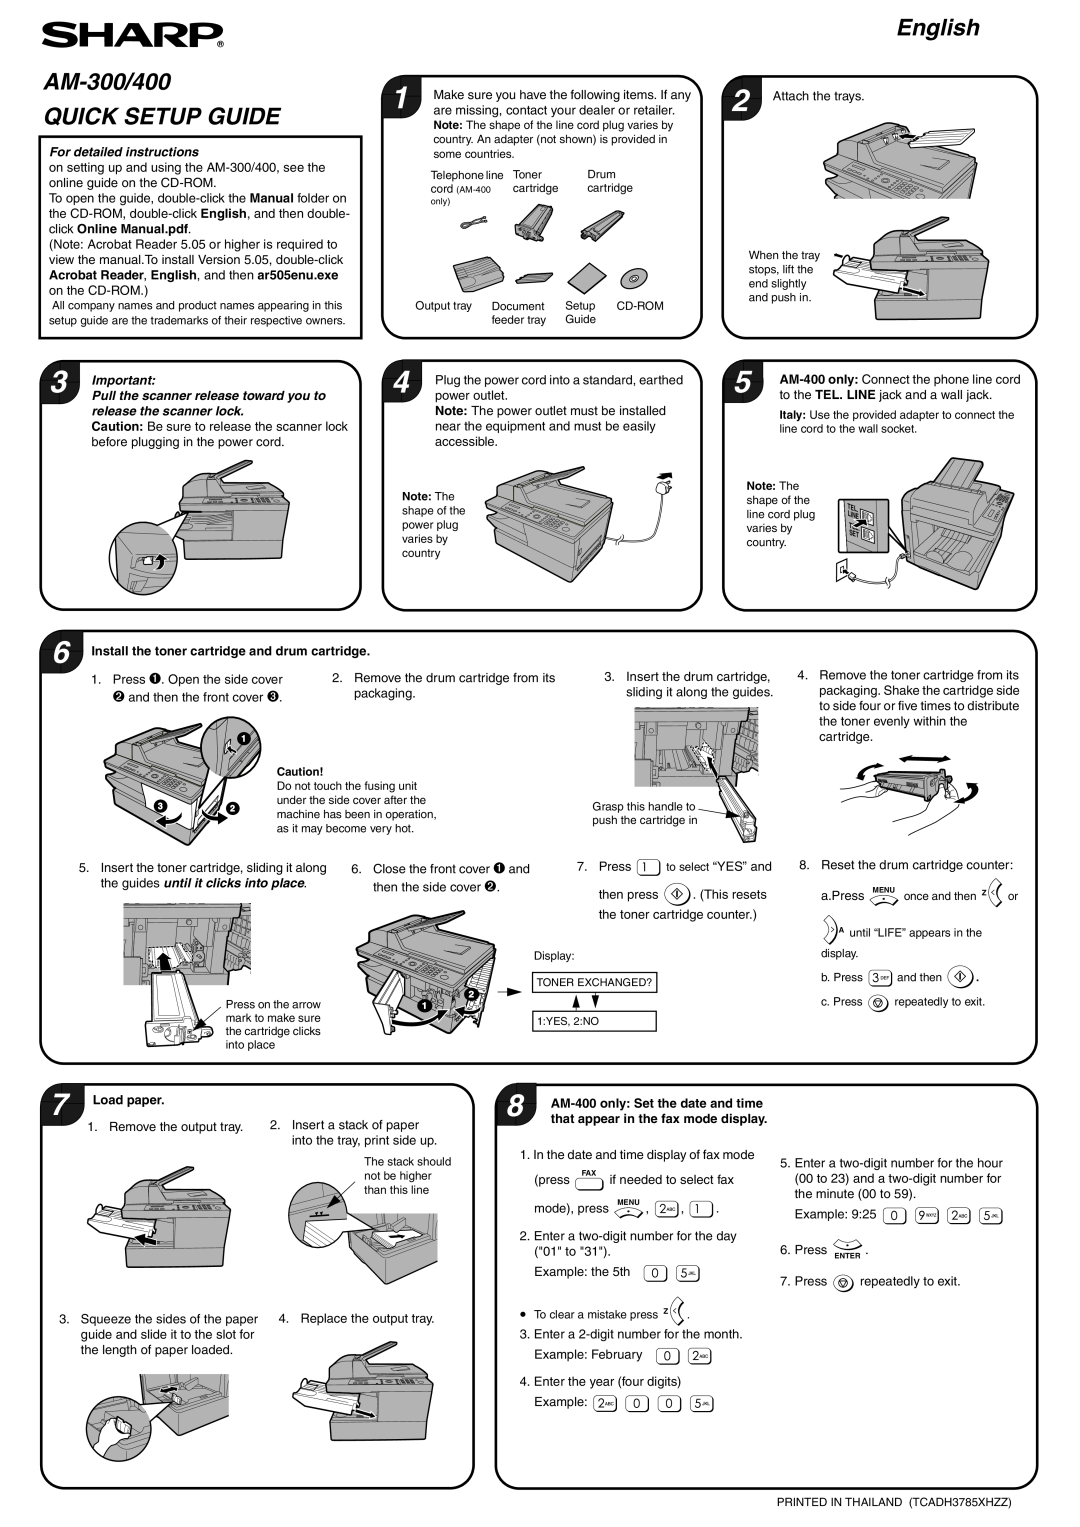 Sharp AM-400 setup guide AM-300/400 QUICK SETUP GUIDE, English, For detailed instructions 